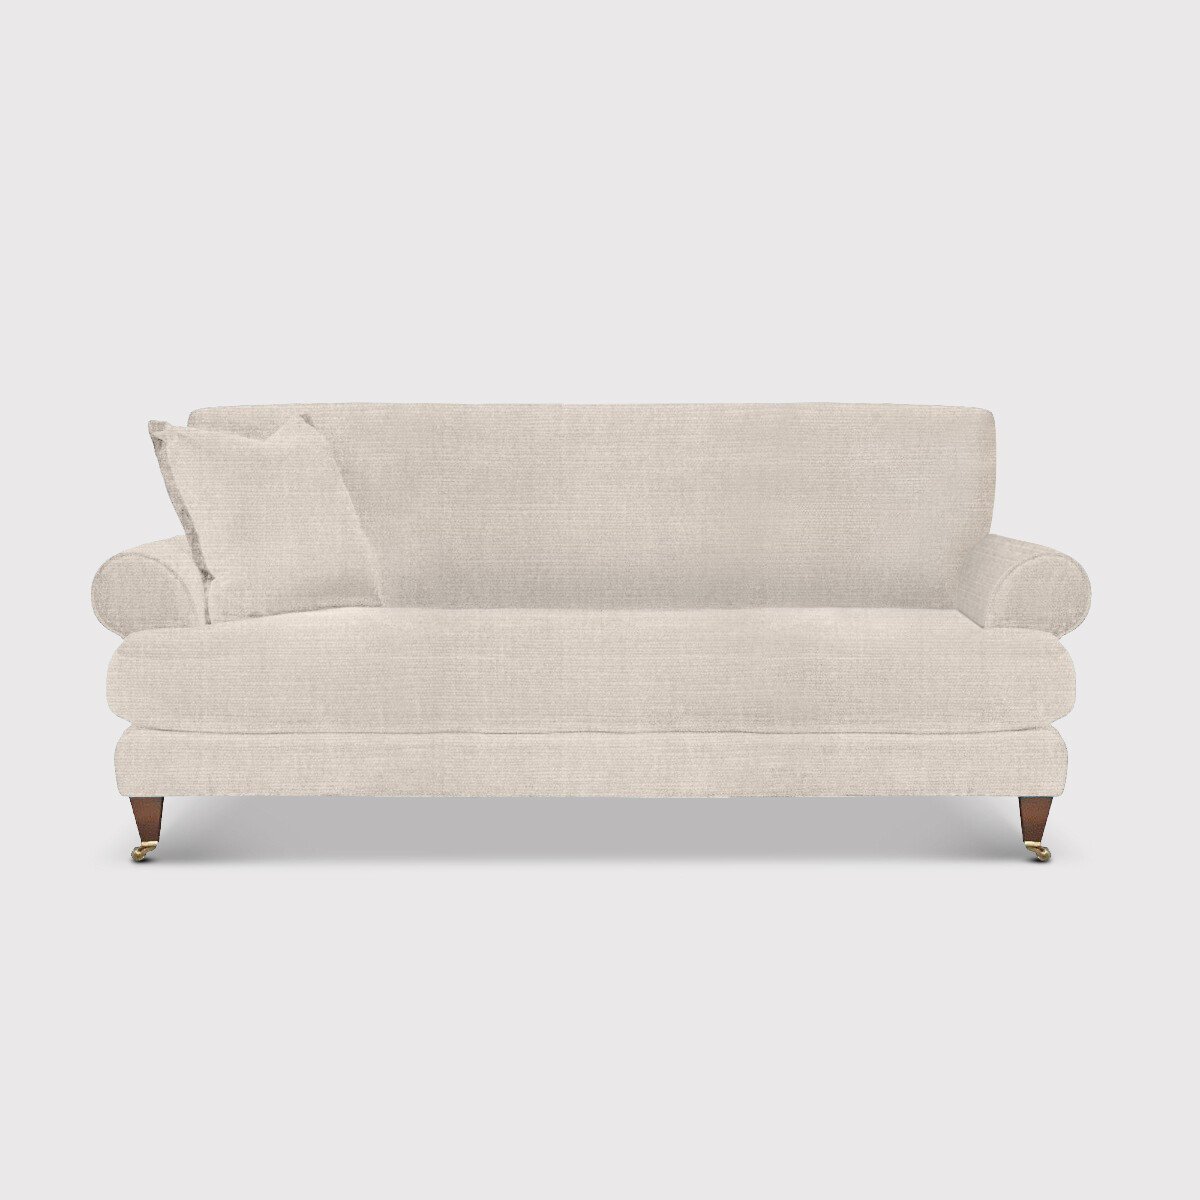 Fairlawn 2 Seater Sofa, Neutral Fabric | Barker & Stonehouse